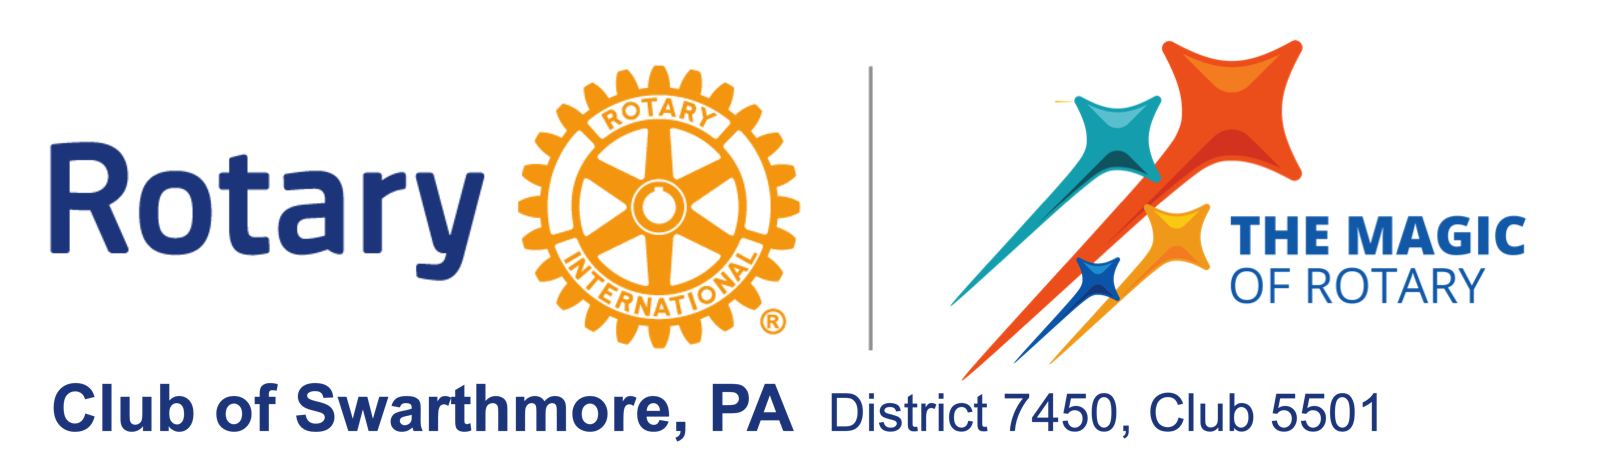 Rotary Club of Swarthmore PA